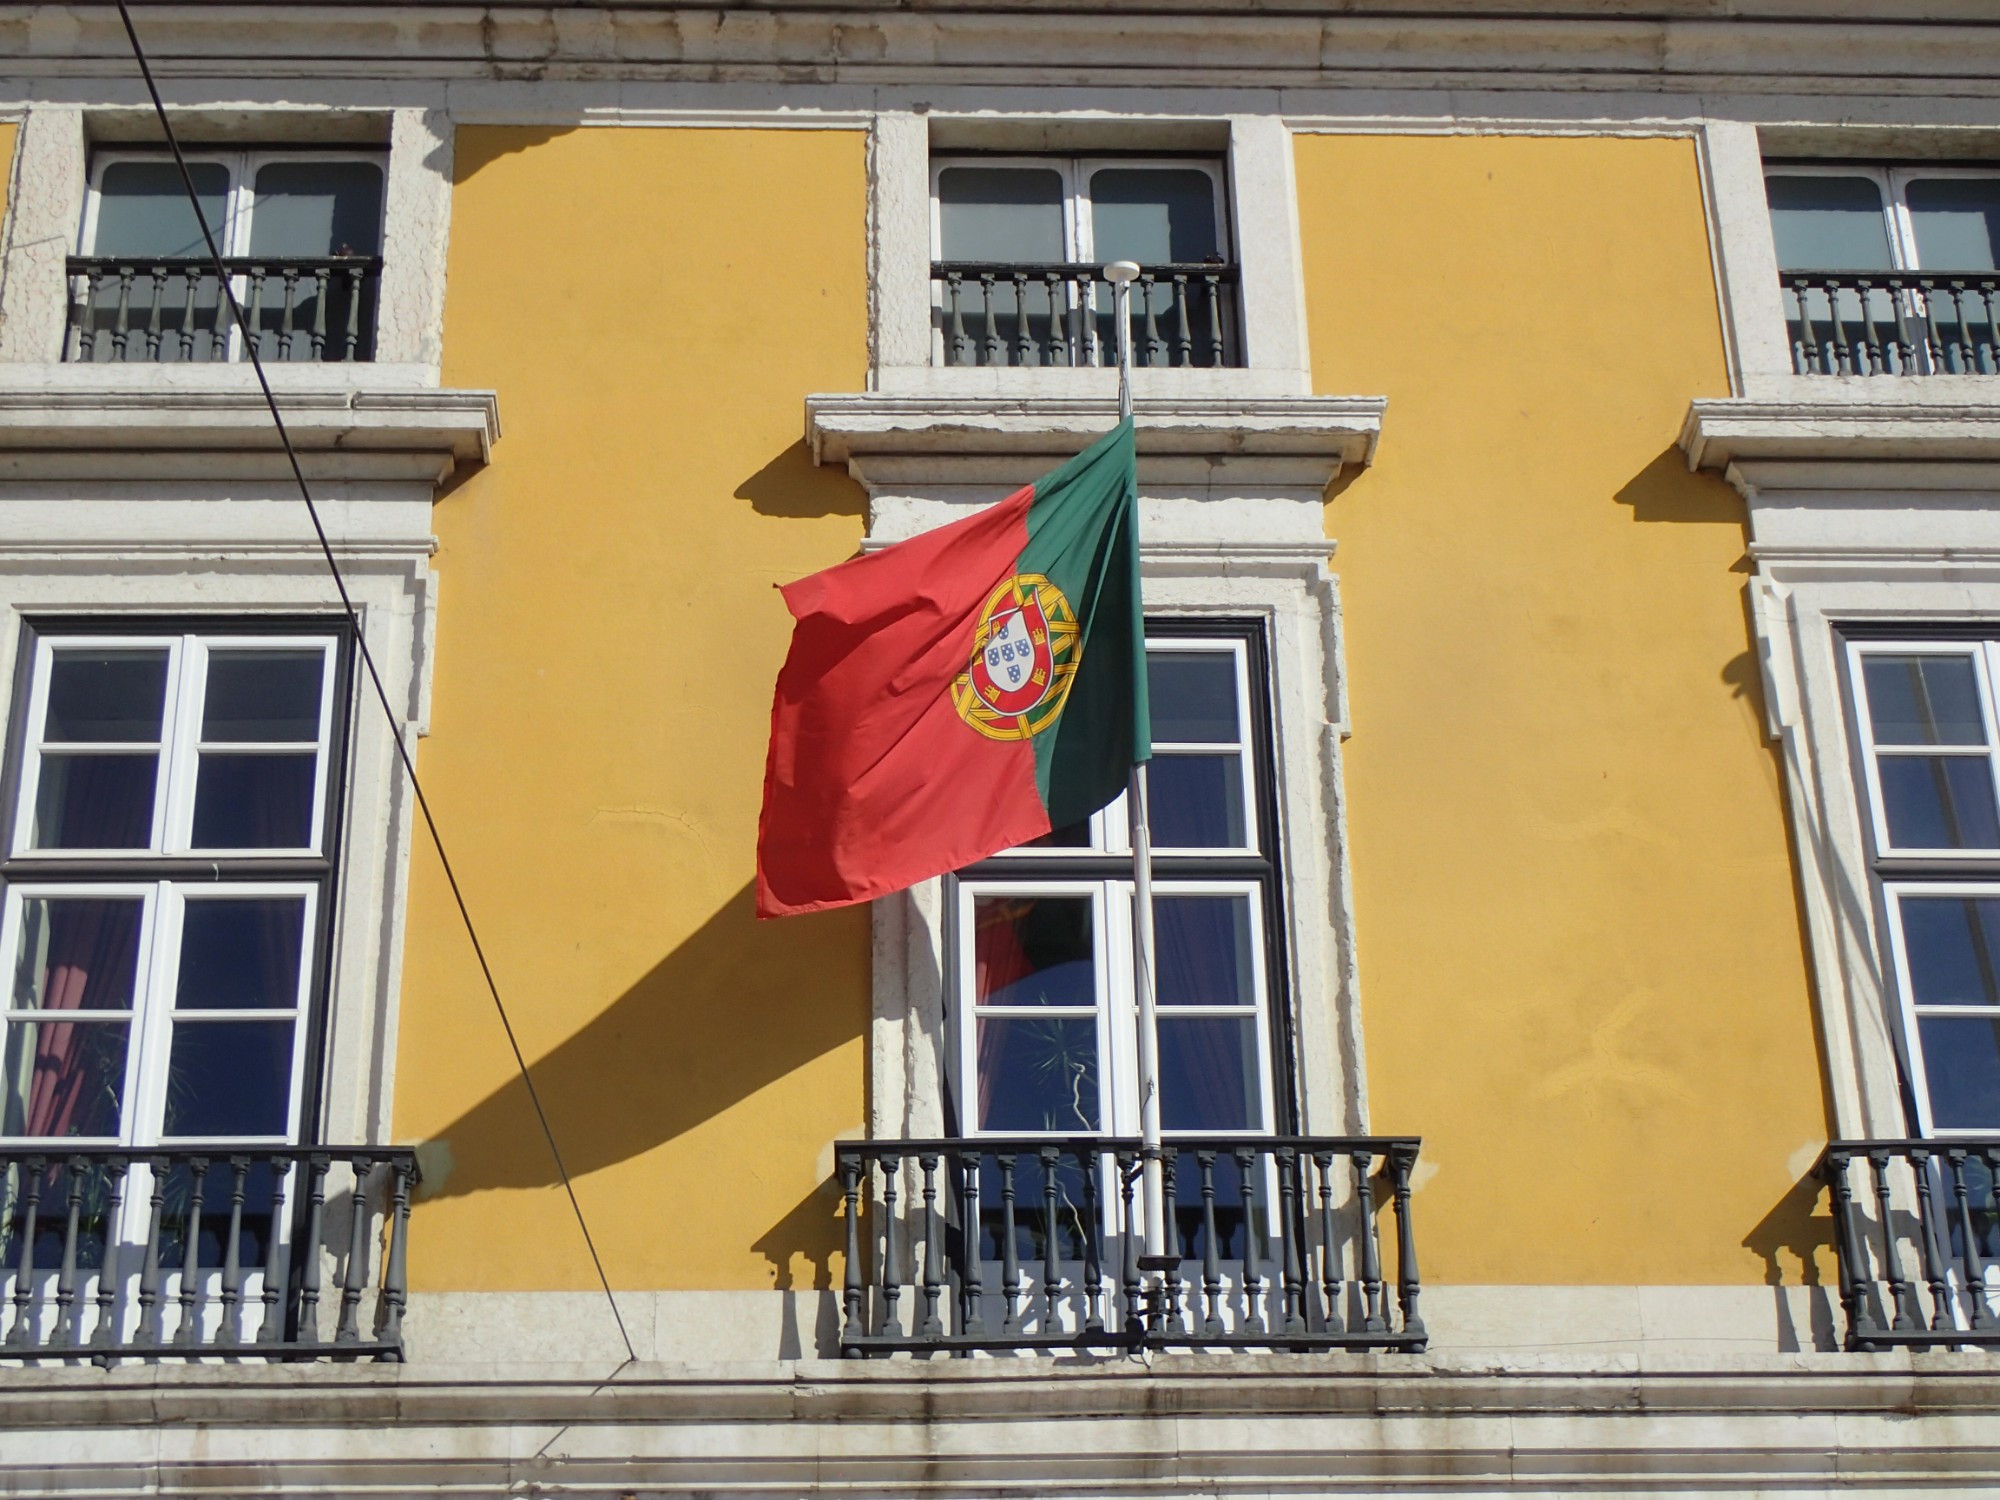 Ministerio da Justiça, Португалия